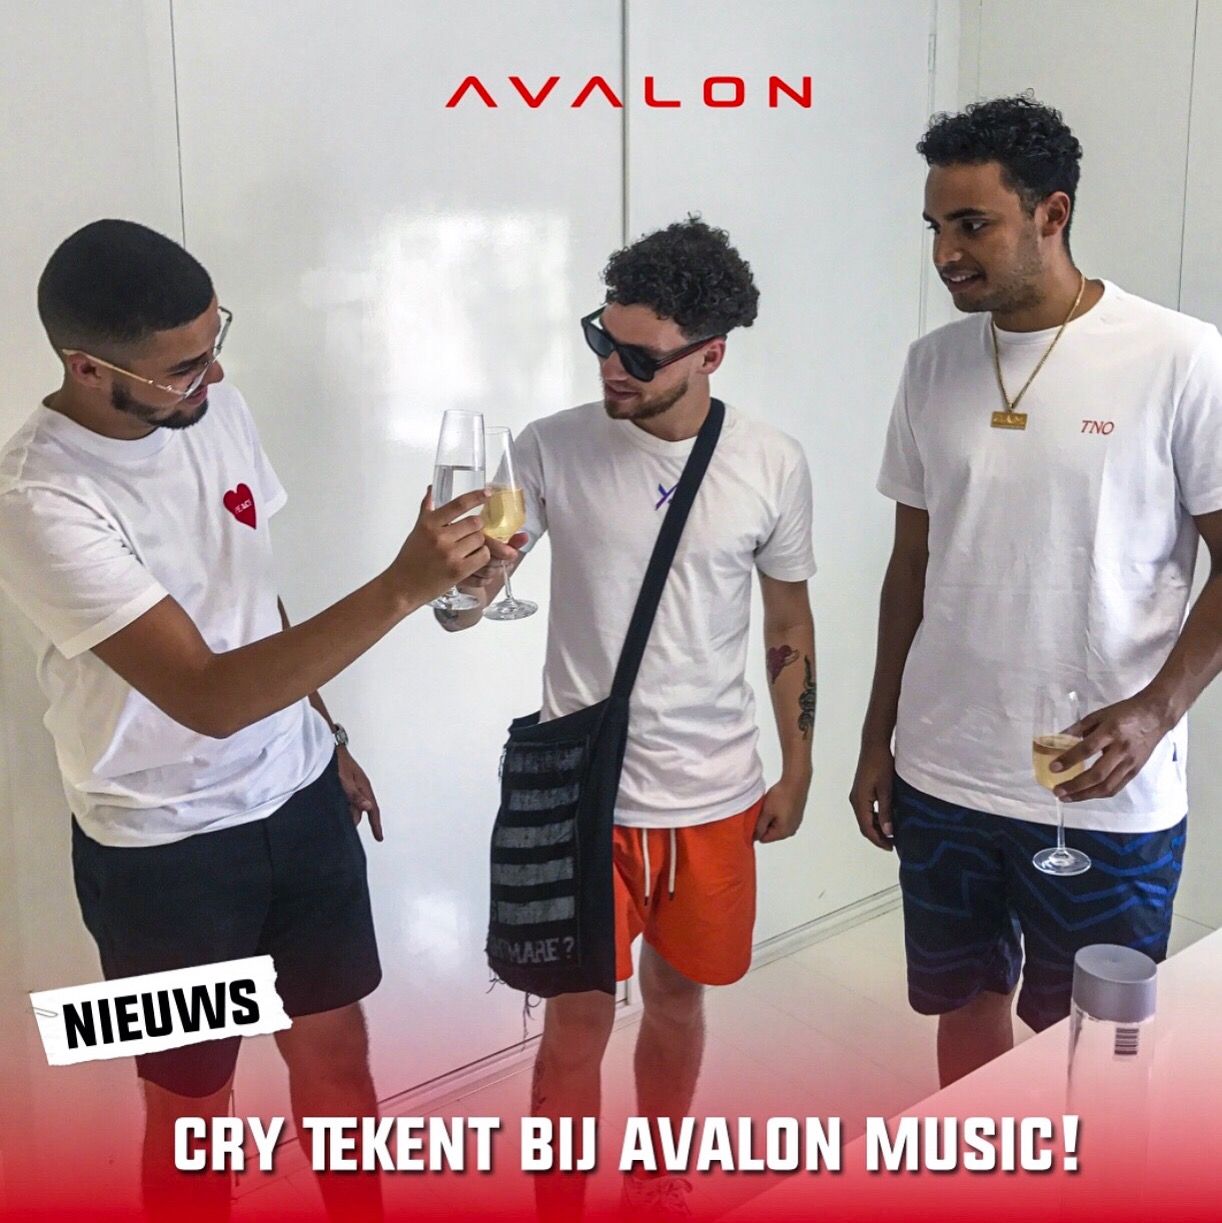 Cry tekent bij Avalon Music!